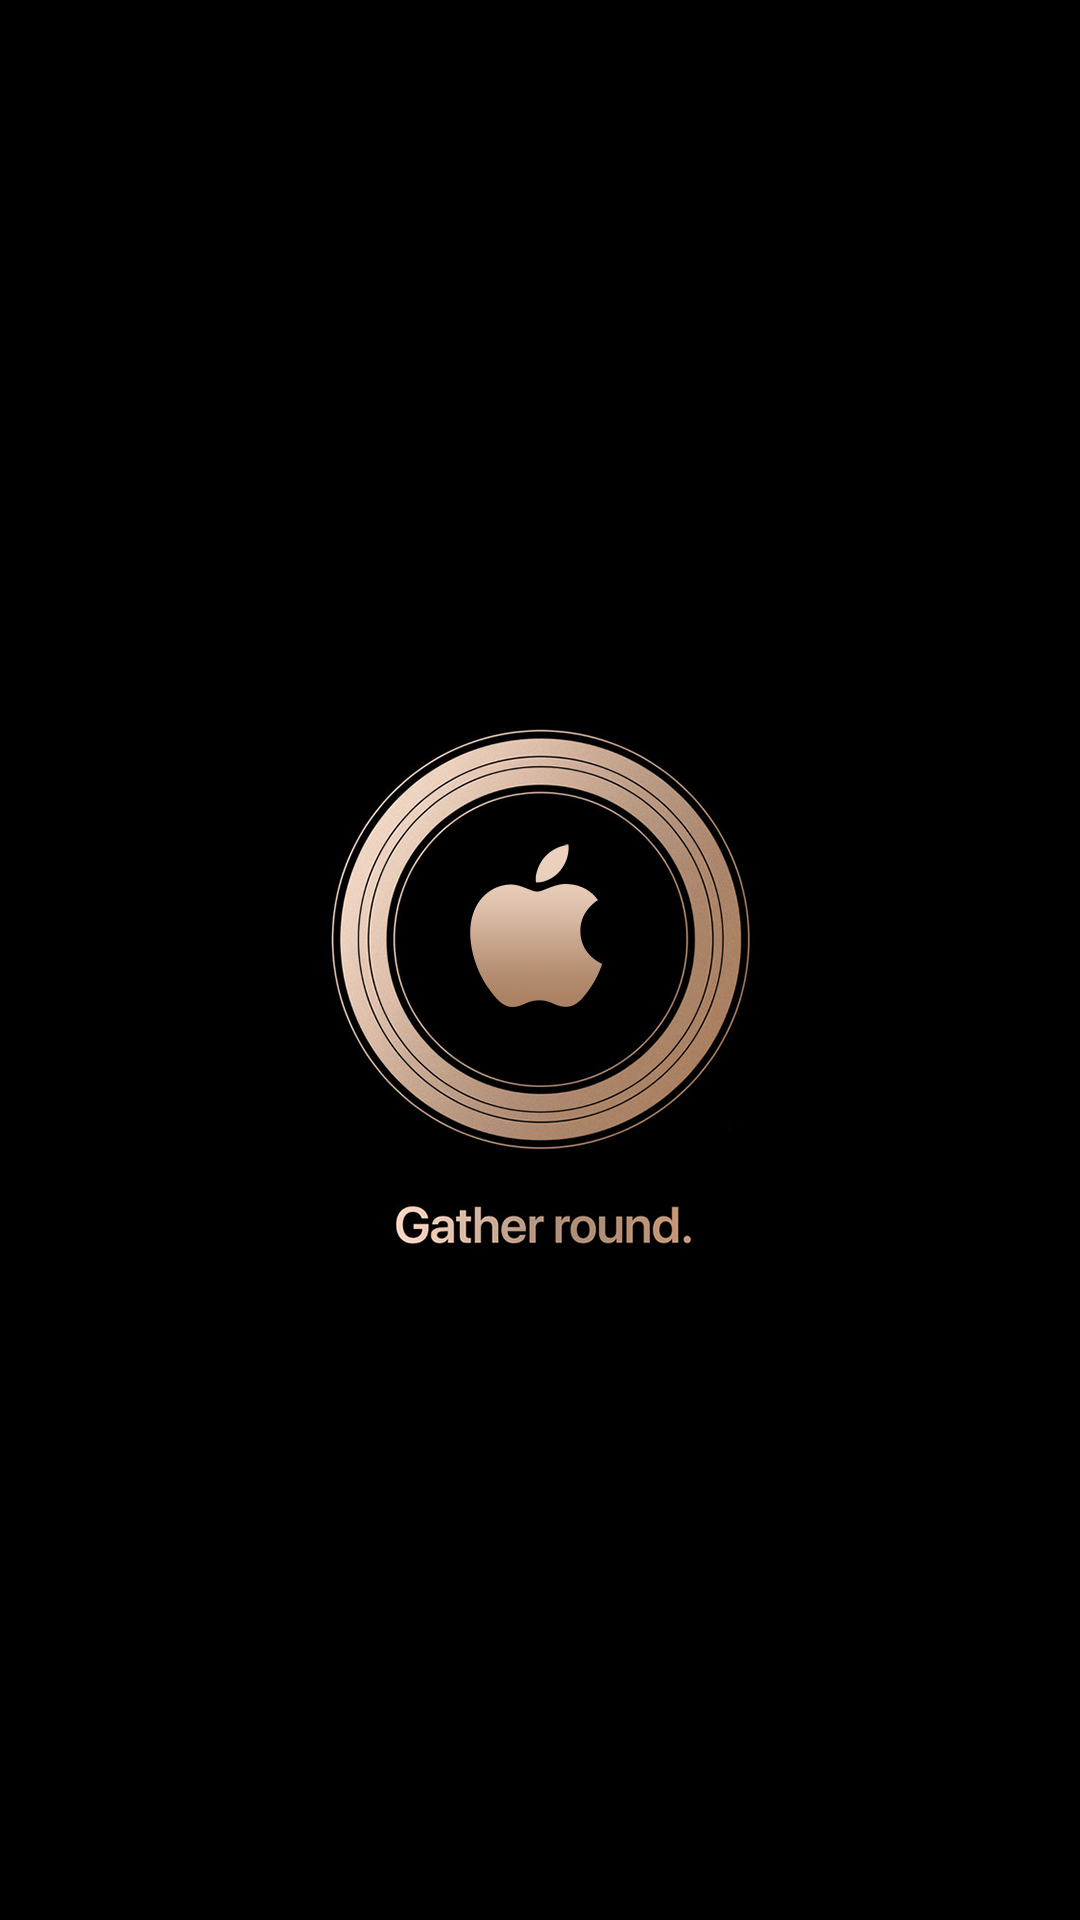 Gather round Apple event wallpaper. Apple logo wallpaper iphone, Apple wallpaper, Apple iphone wallpaper hd